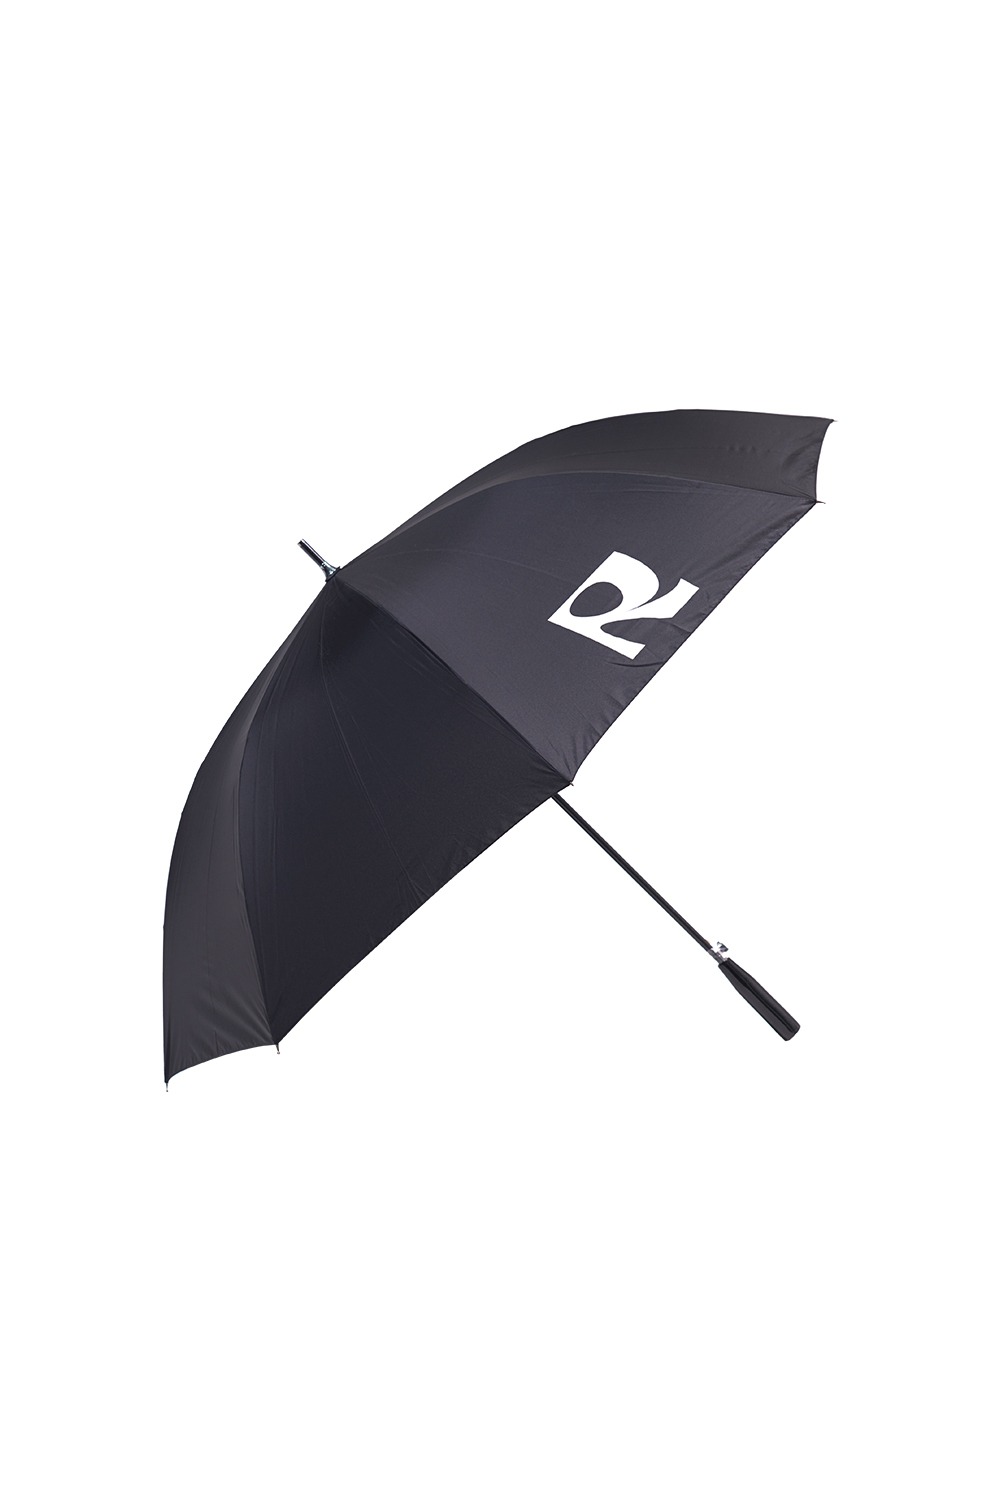 220g 초경량 풀카본 장우산 (블랙) - 리치즈 RICHEZ